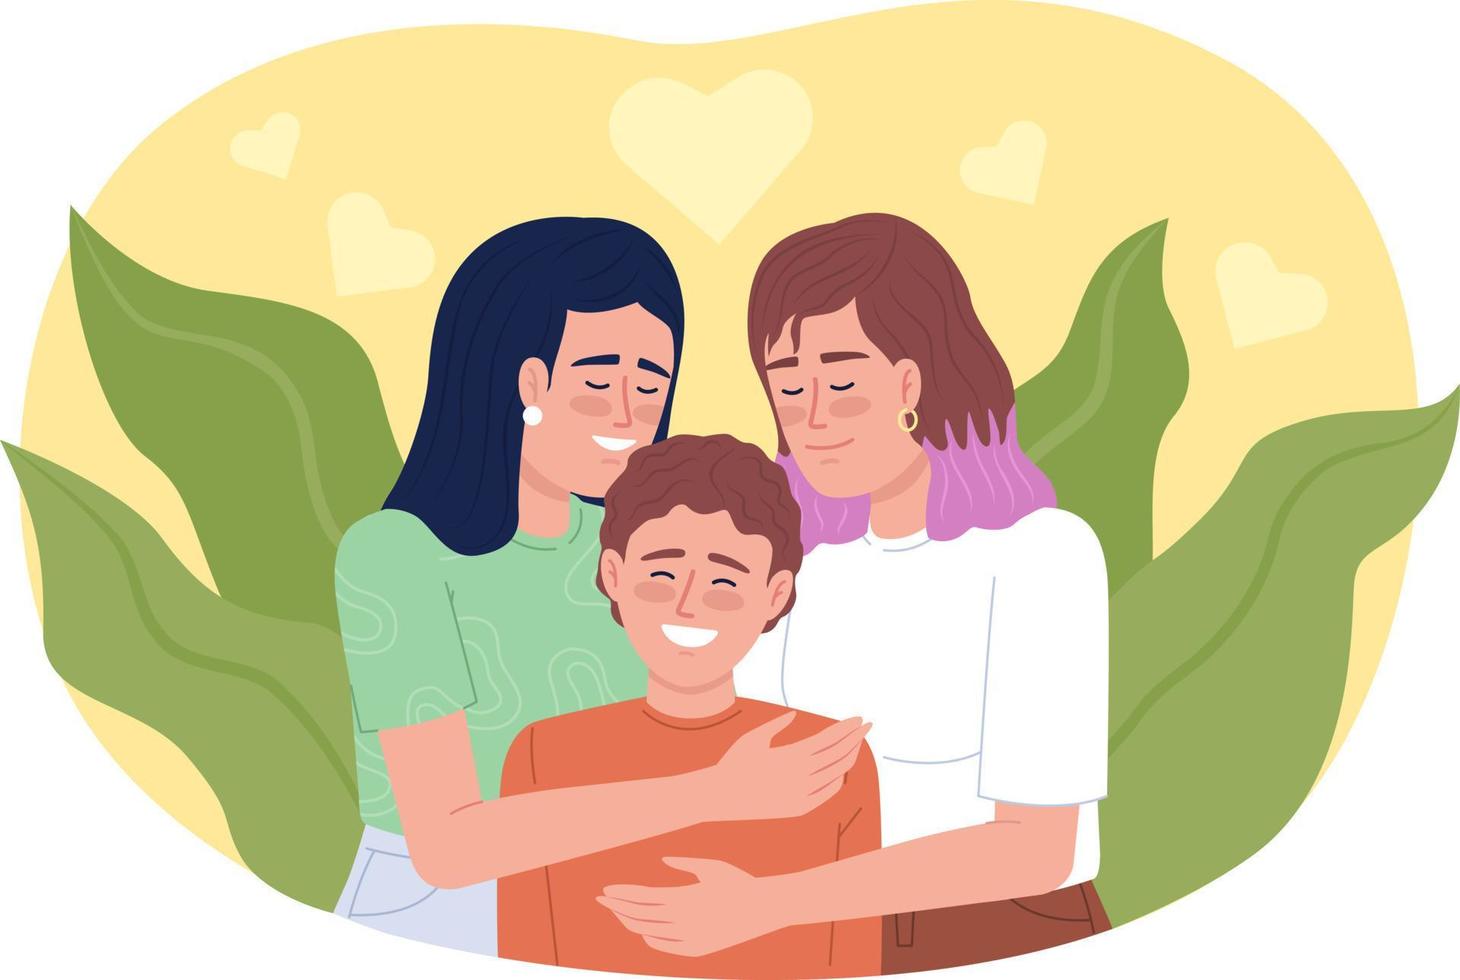 demostración familia amor a niño 2d vector aislado ilustración. madres abrazando sonriente hijo plano caracteres en dibujos animados antecedentes. vistoso editable escena para móvil, sitio web, presentación